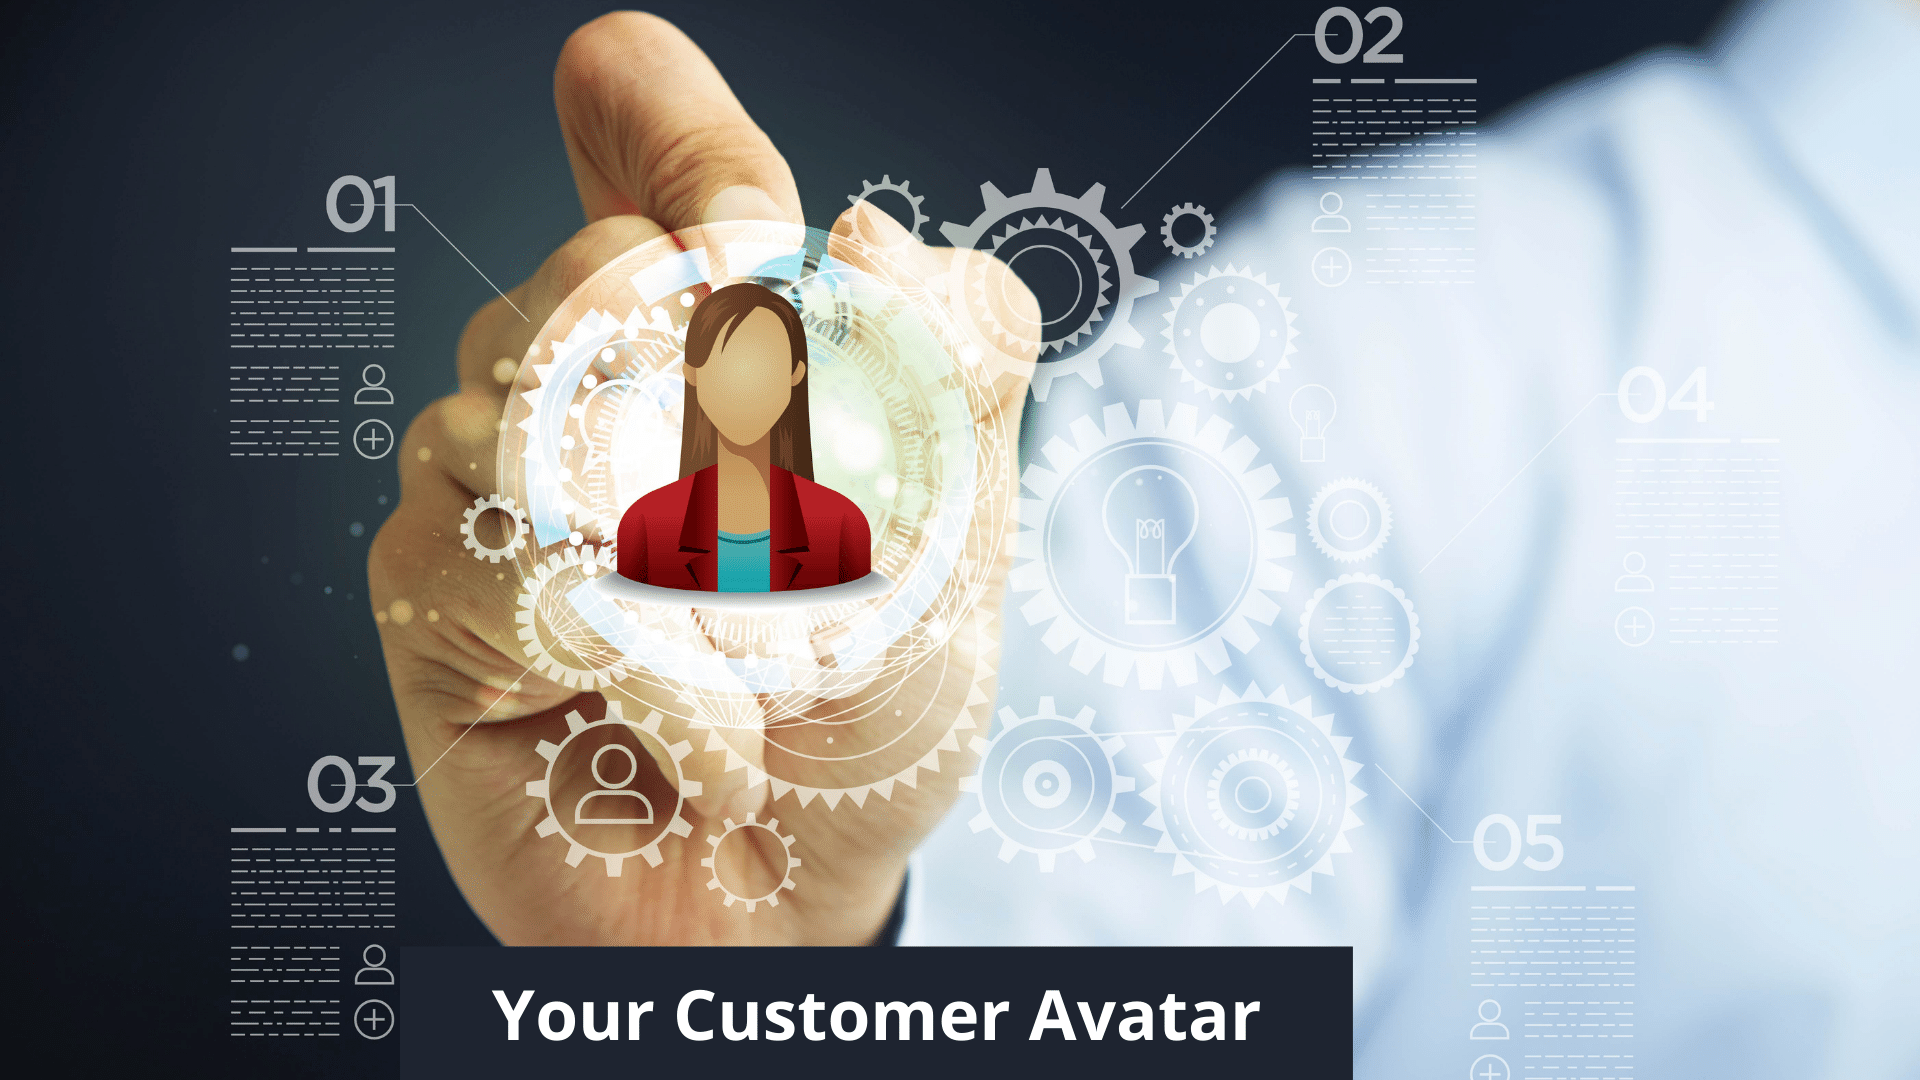 Your Customer Avatar